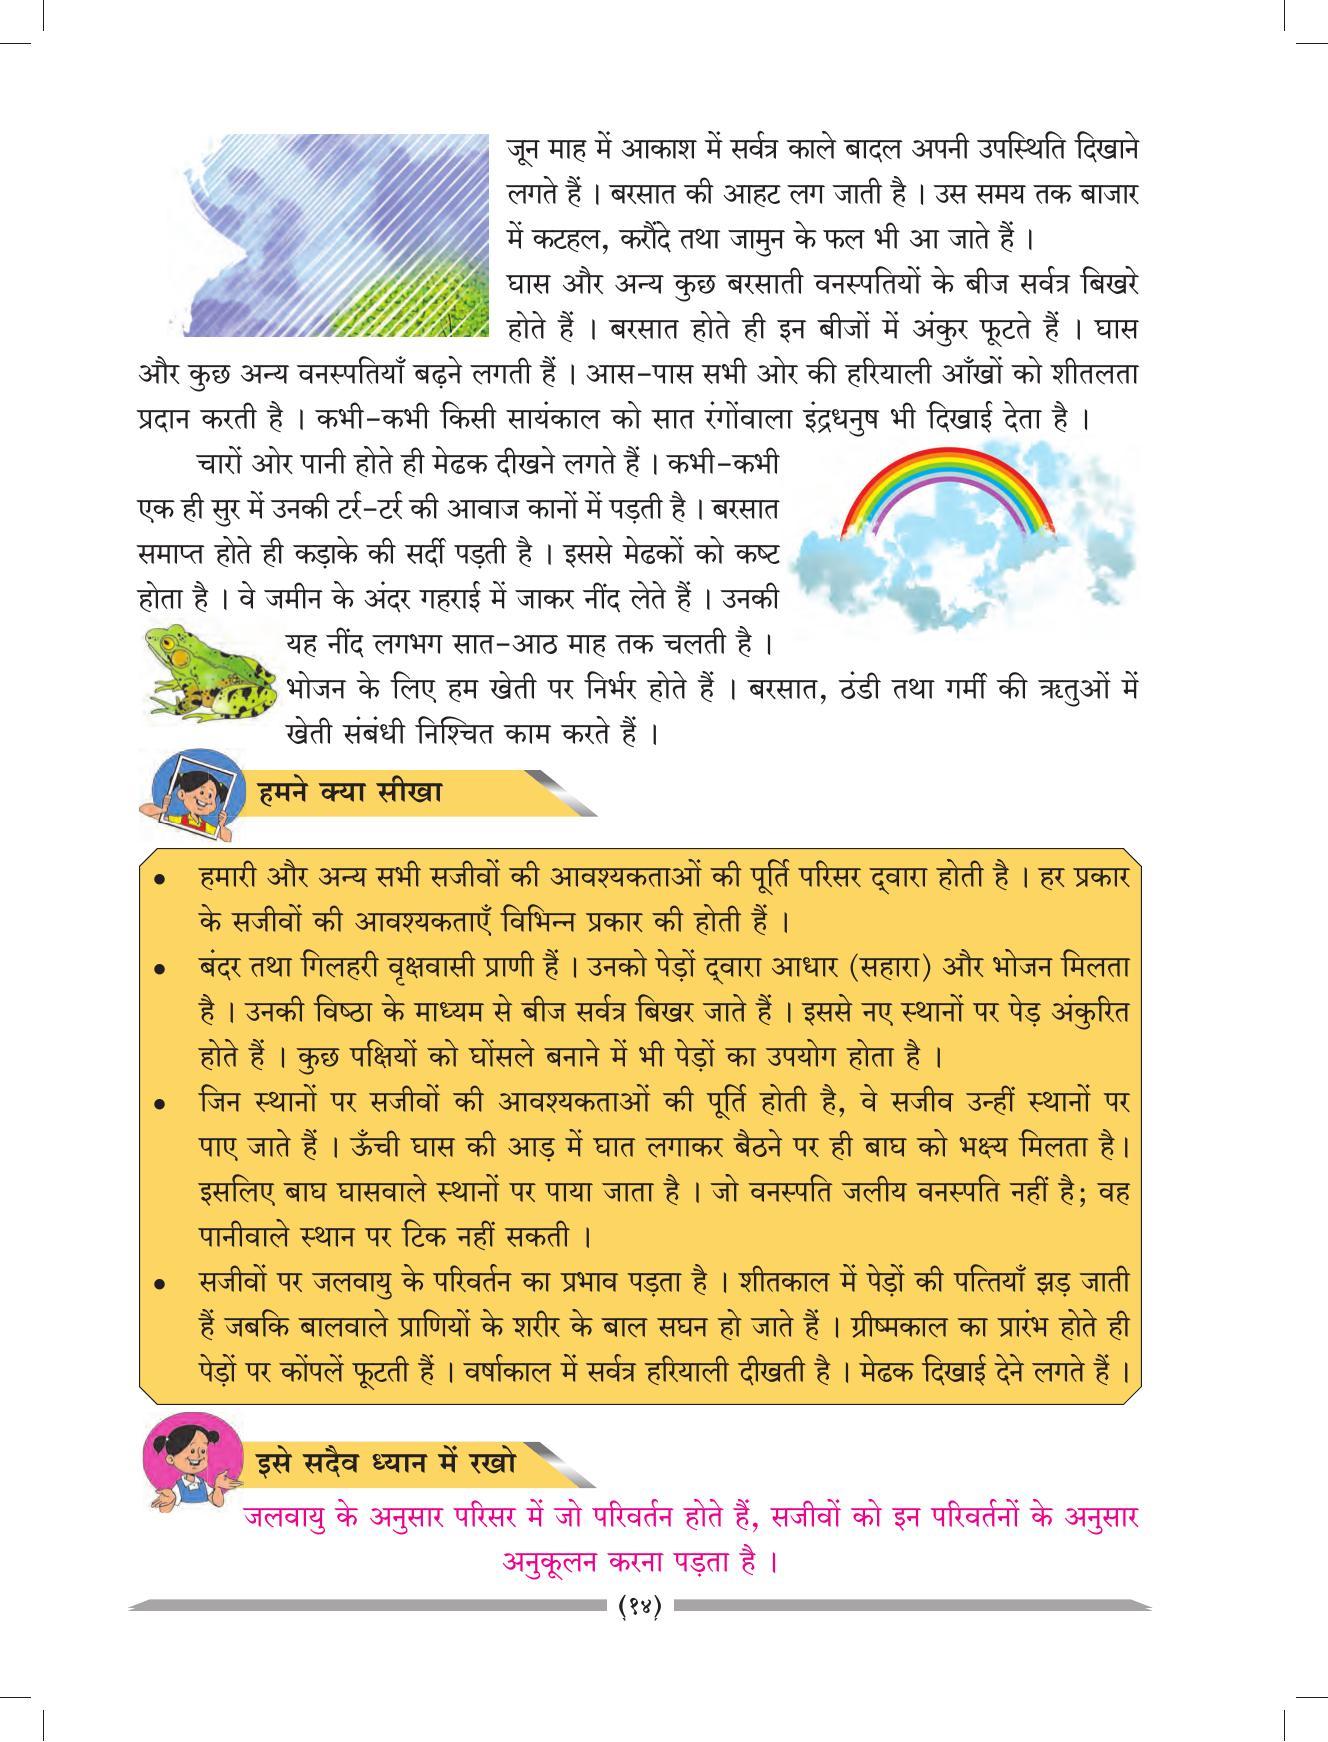 Maharashtra Board Class 4 EVS 1 (Hindi Medium) Textbook - Page 24